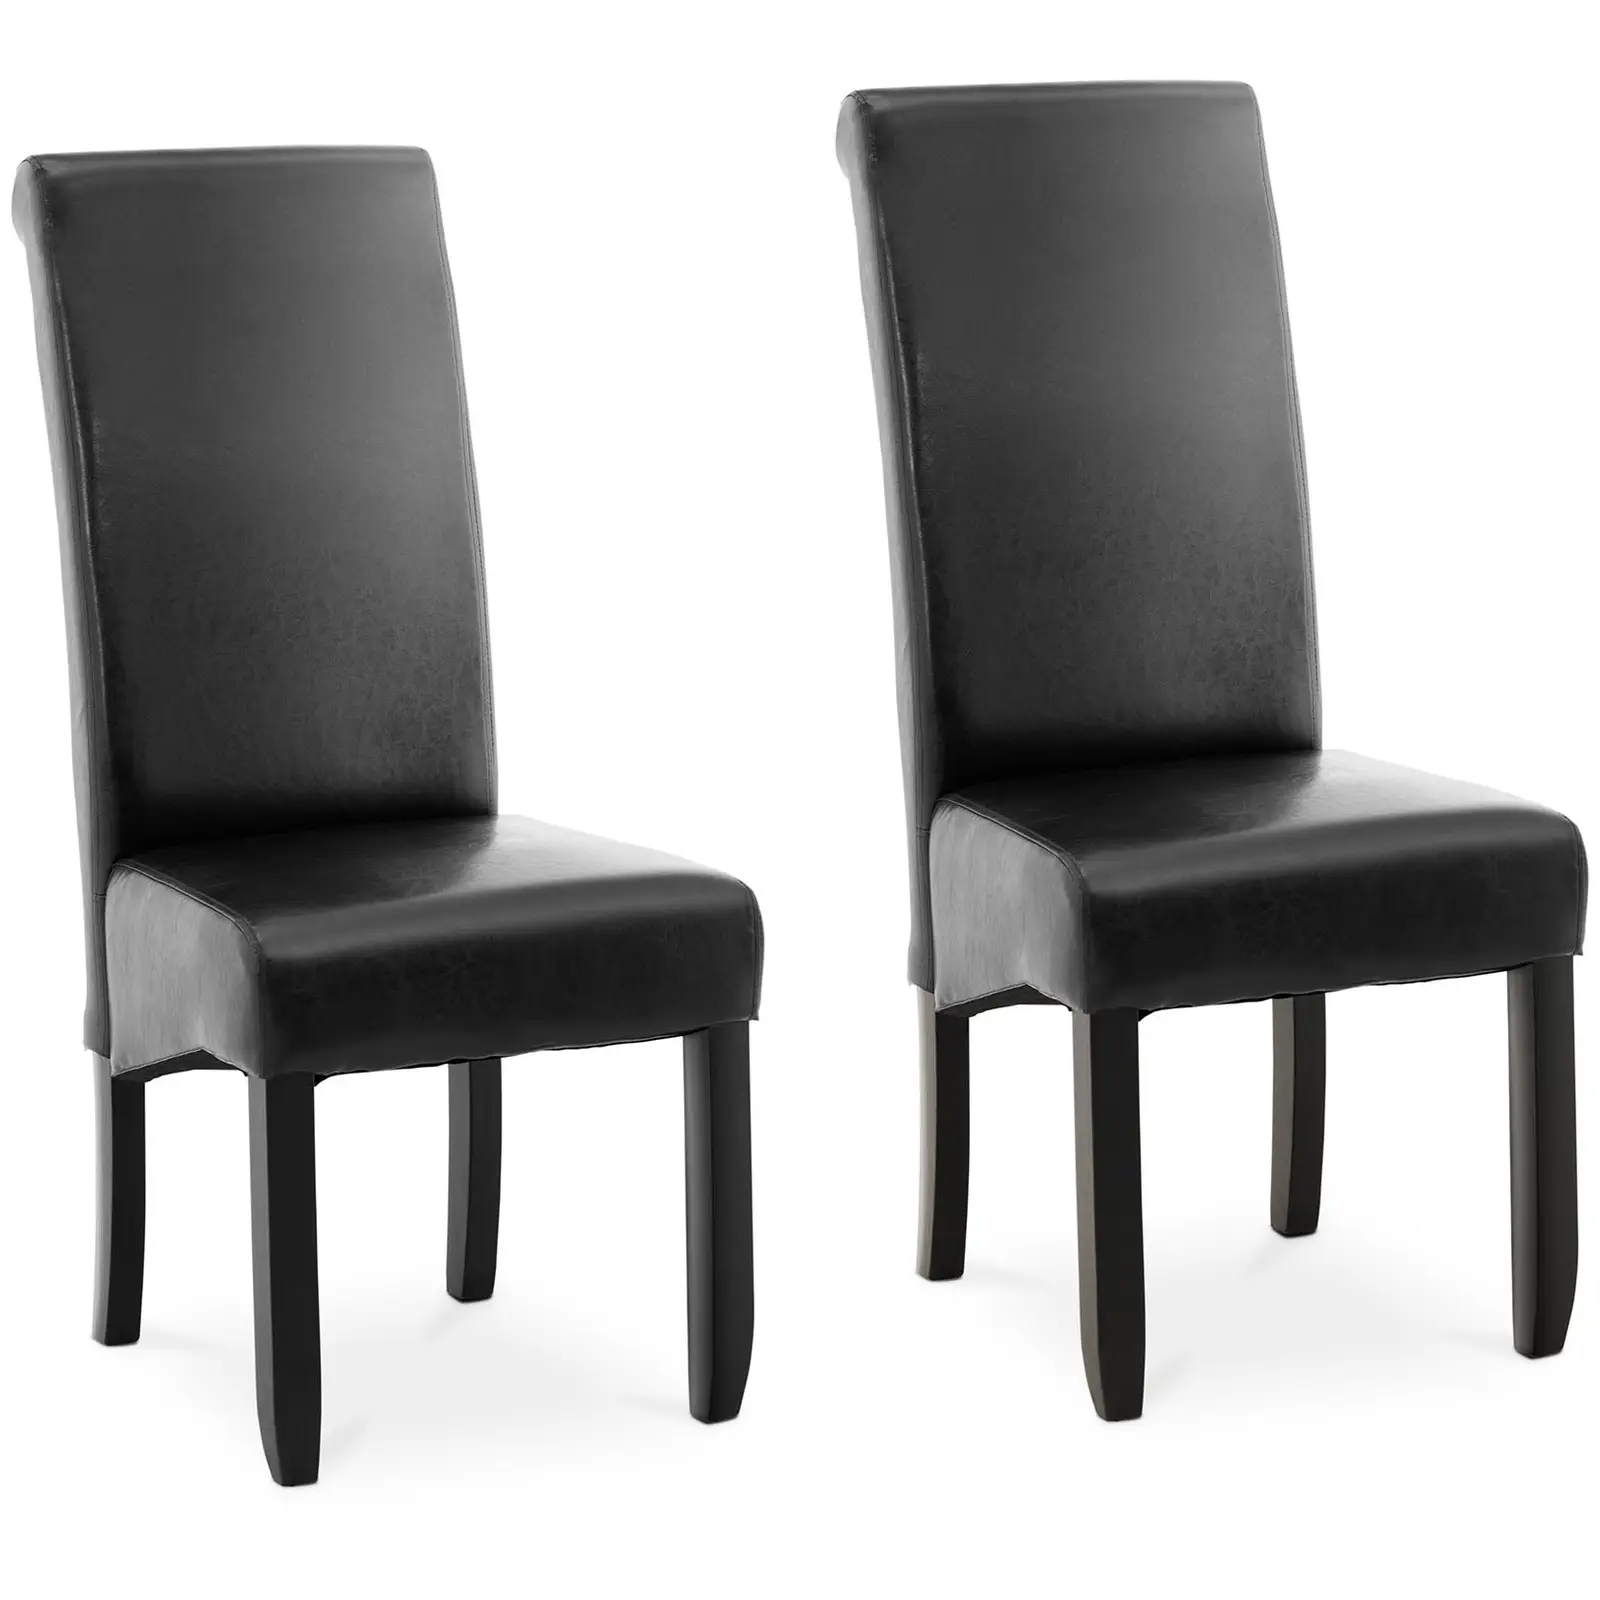 Silla tapizada - set de 2 - hasta 180 kg - asiento de 44,5 x 44 cm - negra